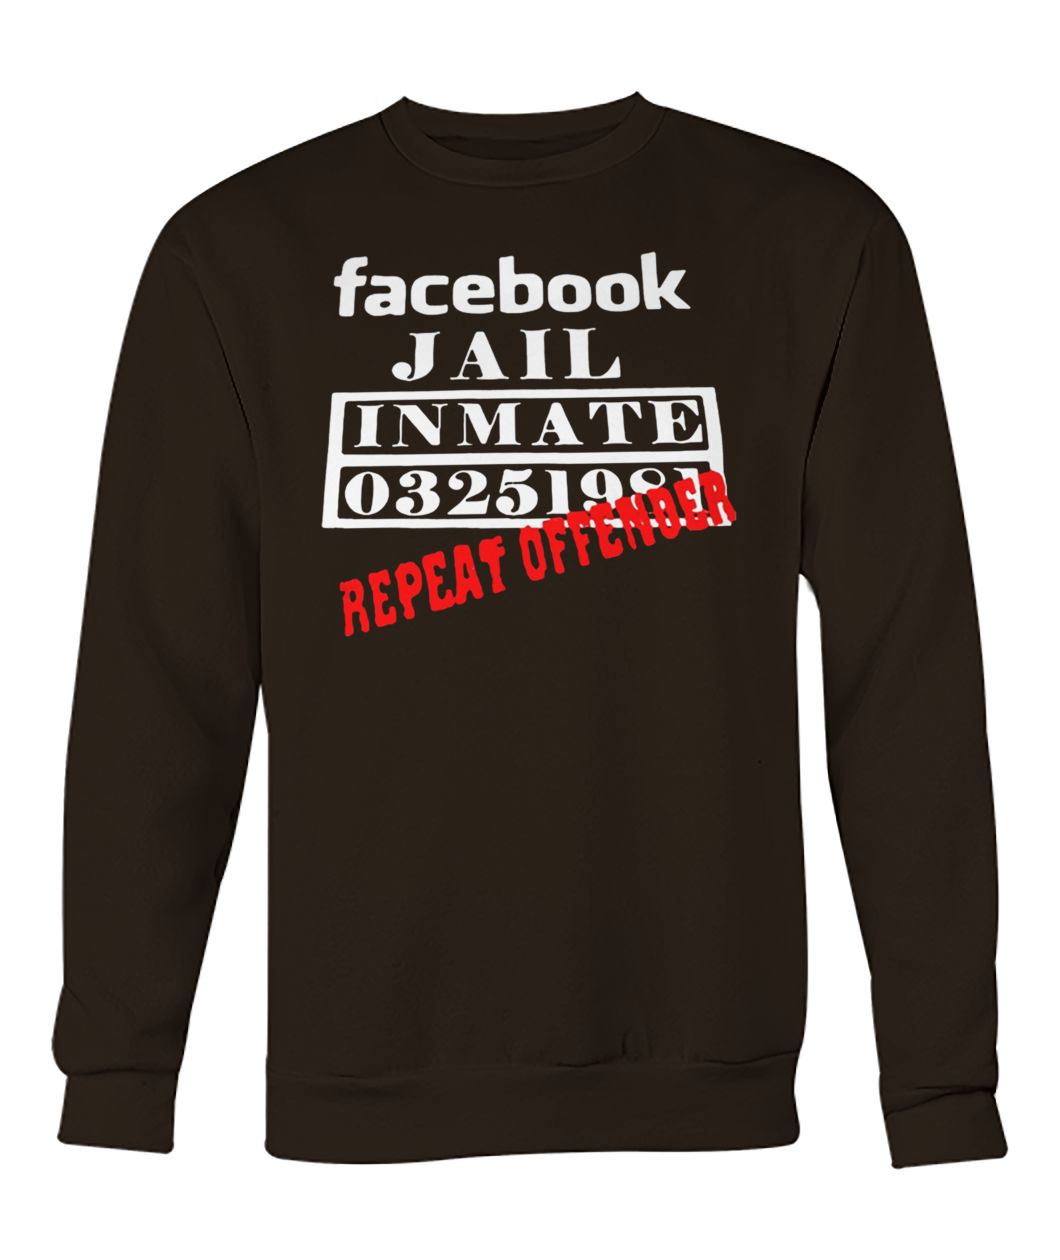 Facebook Jail inmate 03251981 repeat offender crew neck sweatshirt